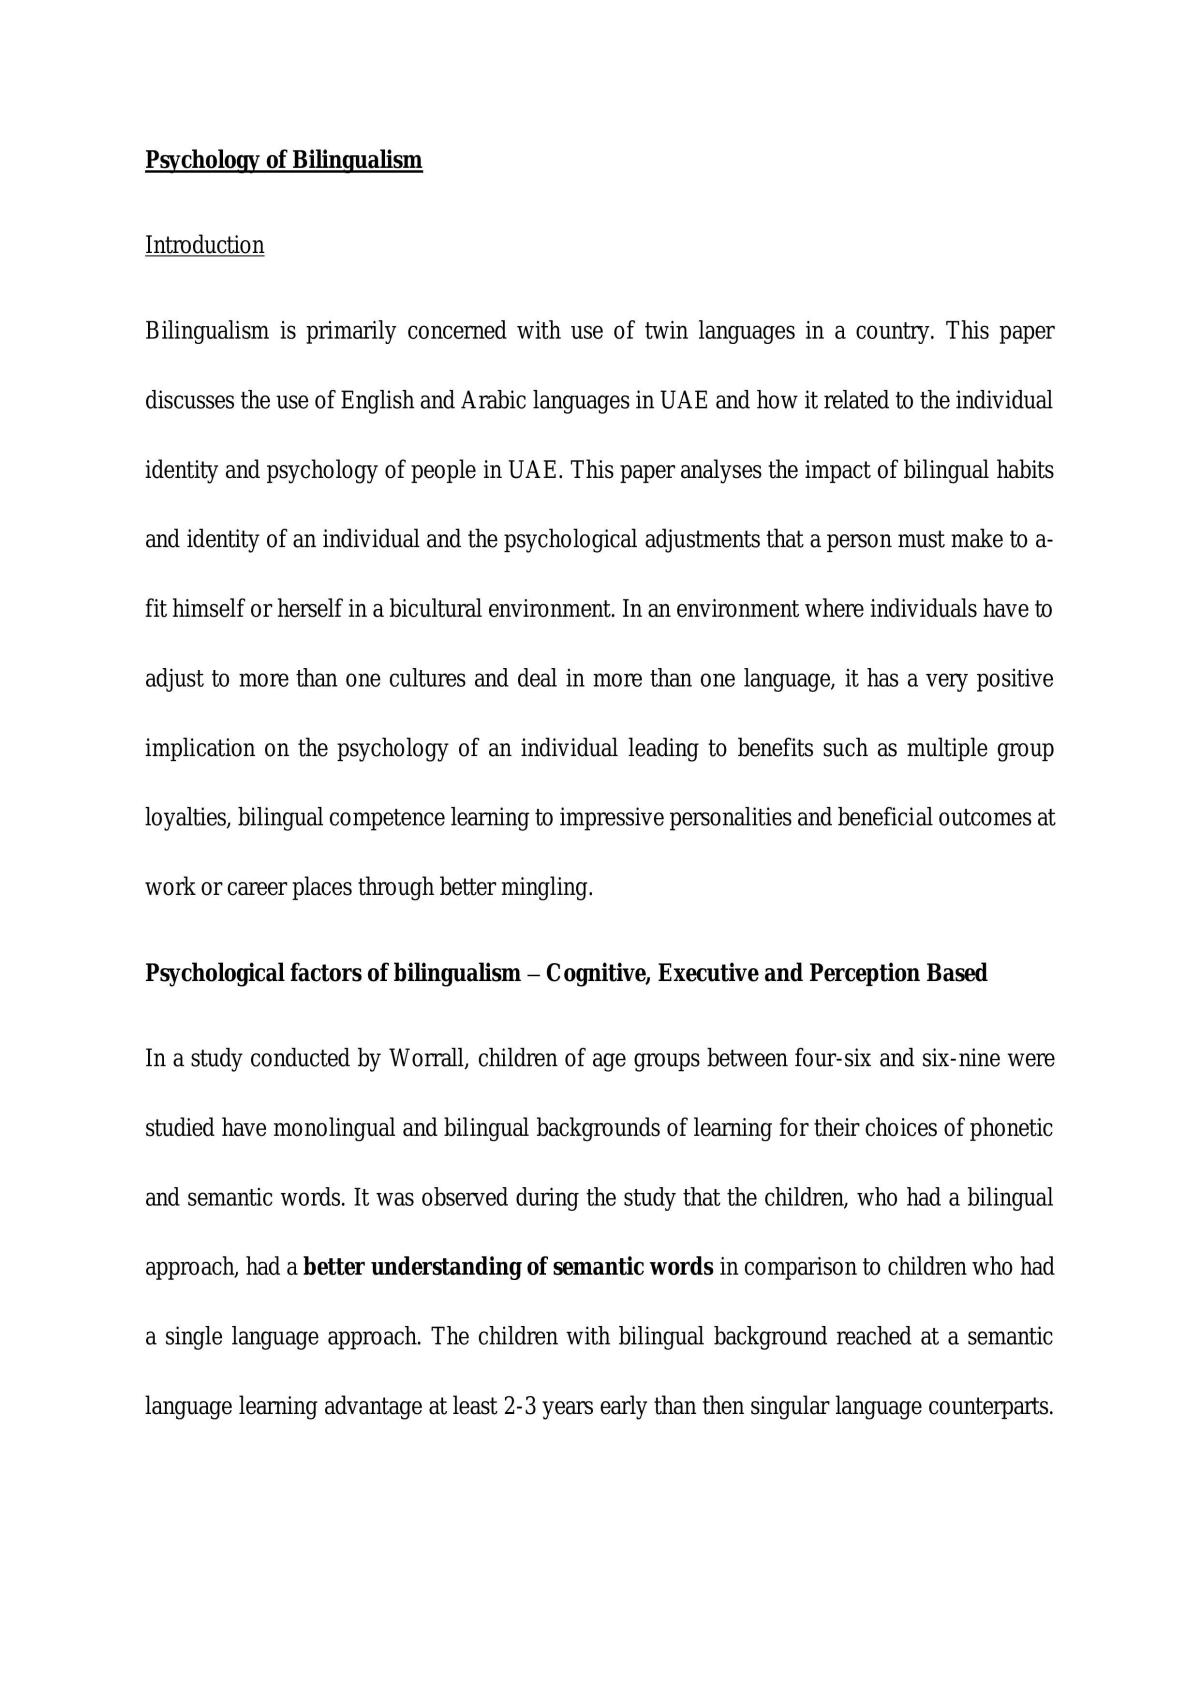 Psychology of Bilingualism Essay. - Page 1